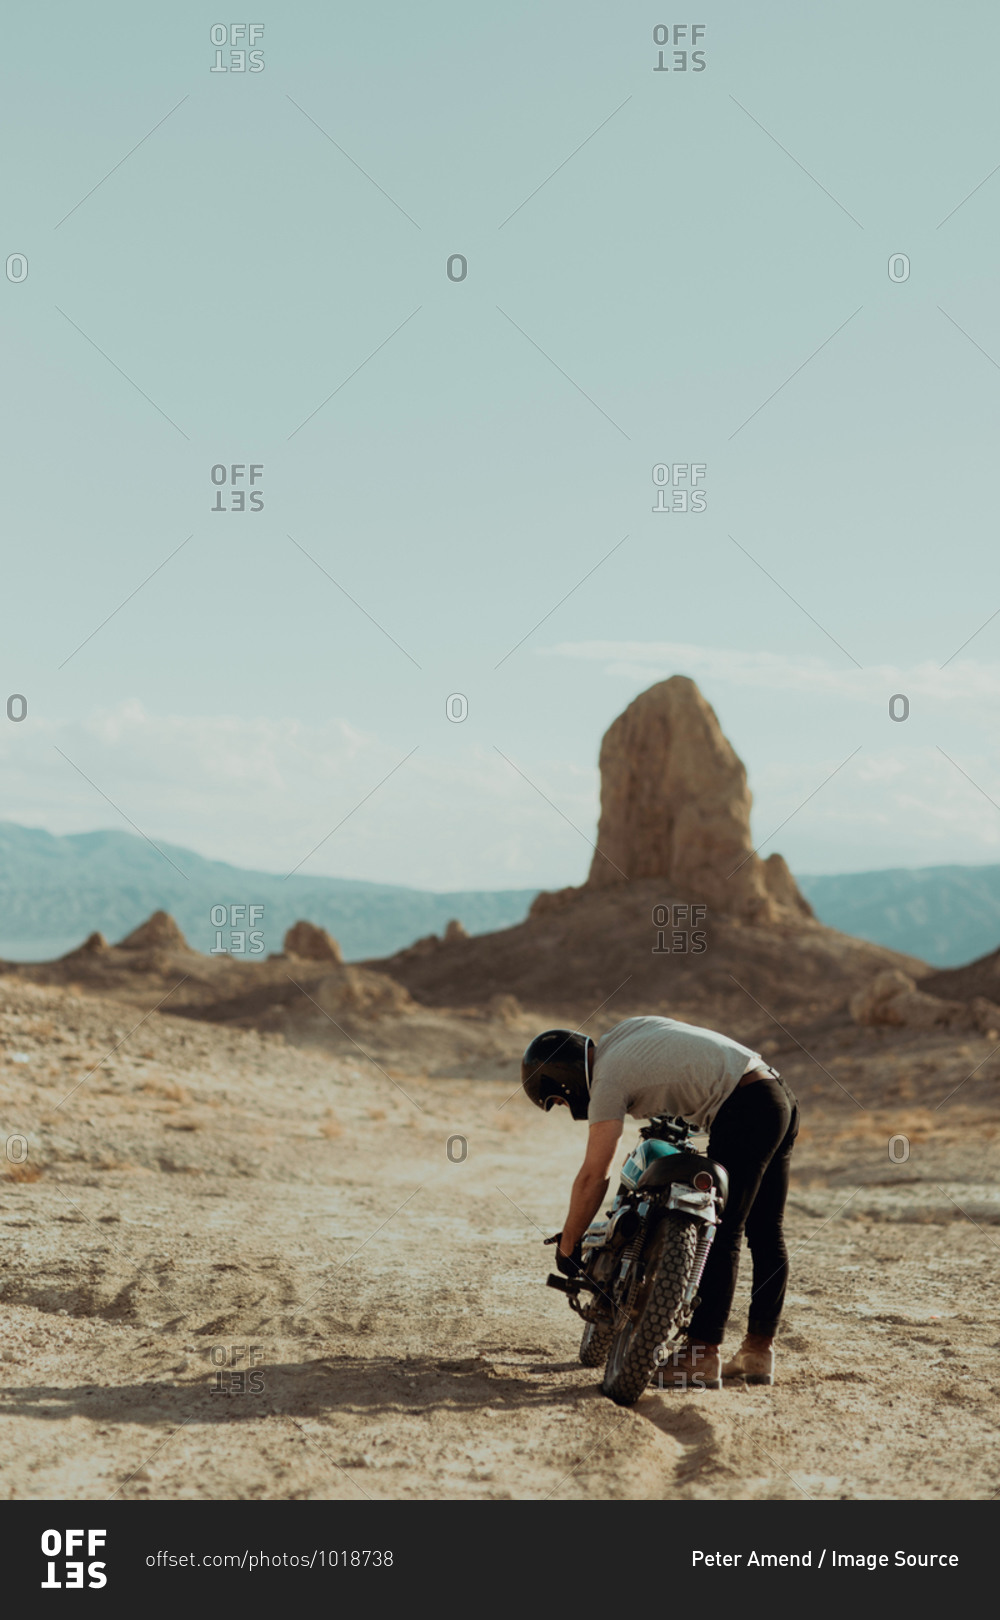 Motorcyclist bending over bike in desert, Trona Pinnacles, California, US